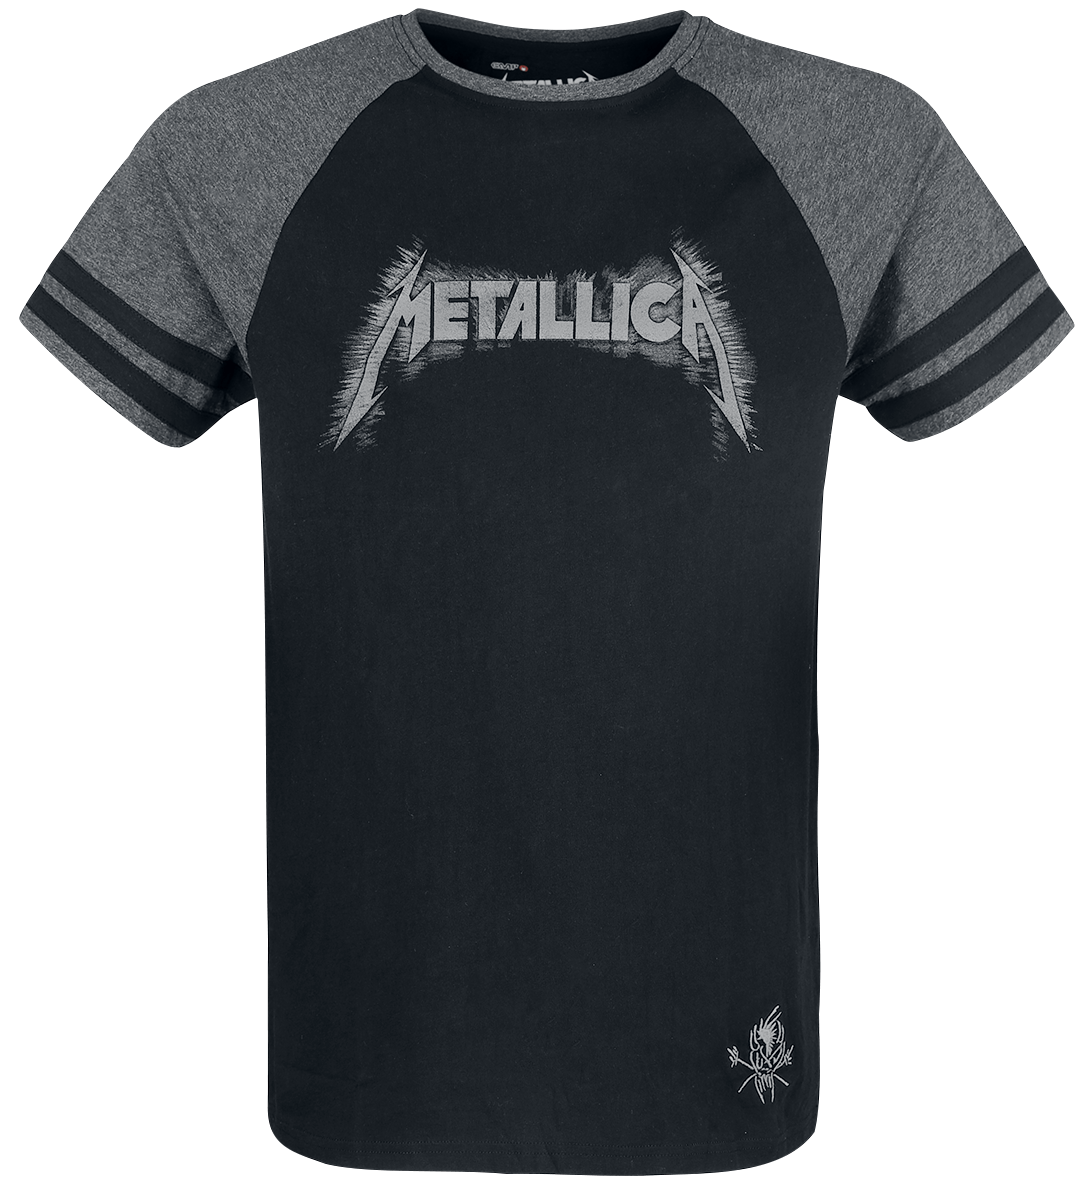 Metallica - EMP Signature Collection - T-Shirt - schwarz| grau - EMP Exklusiv!